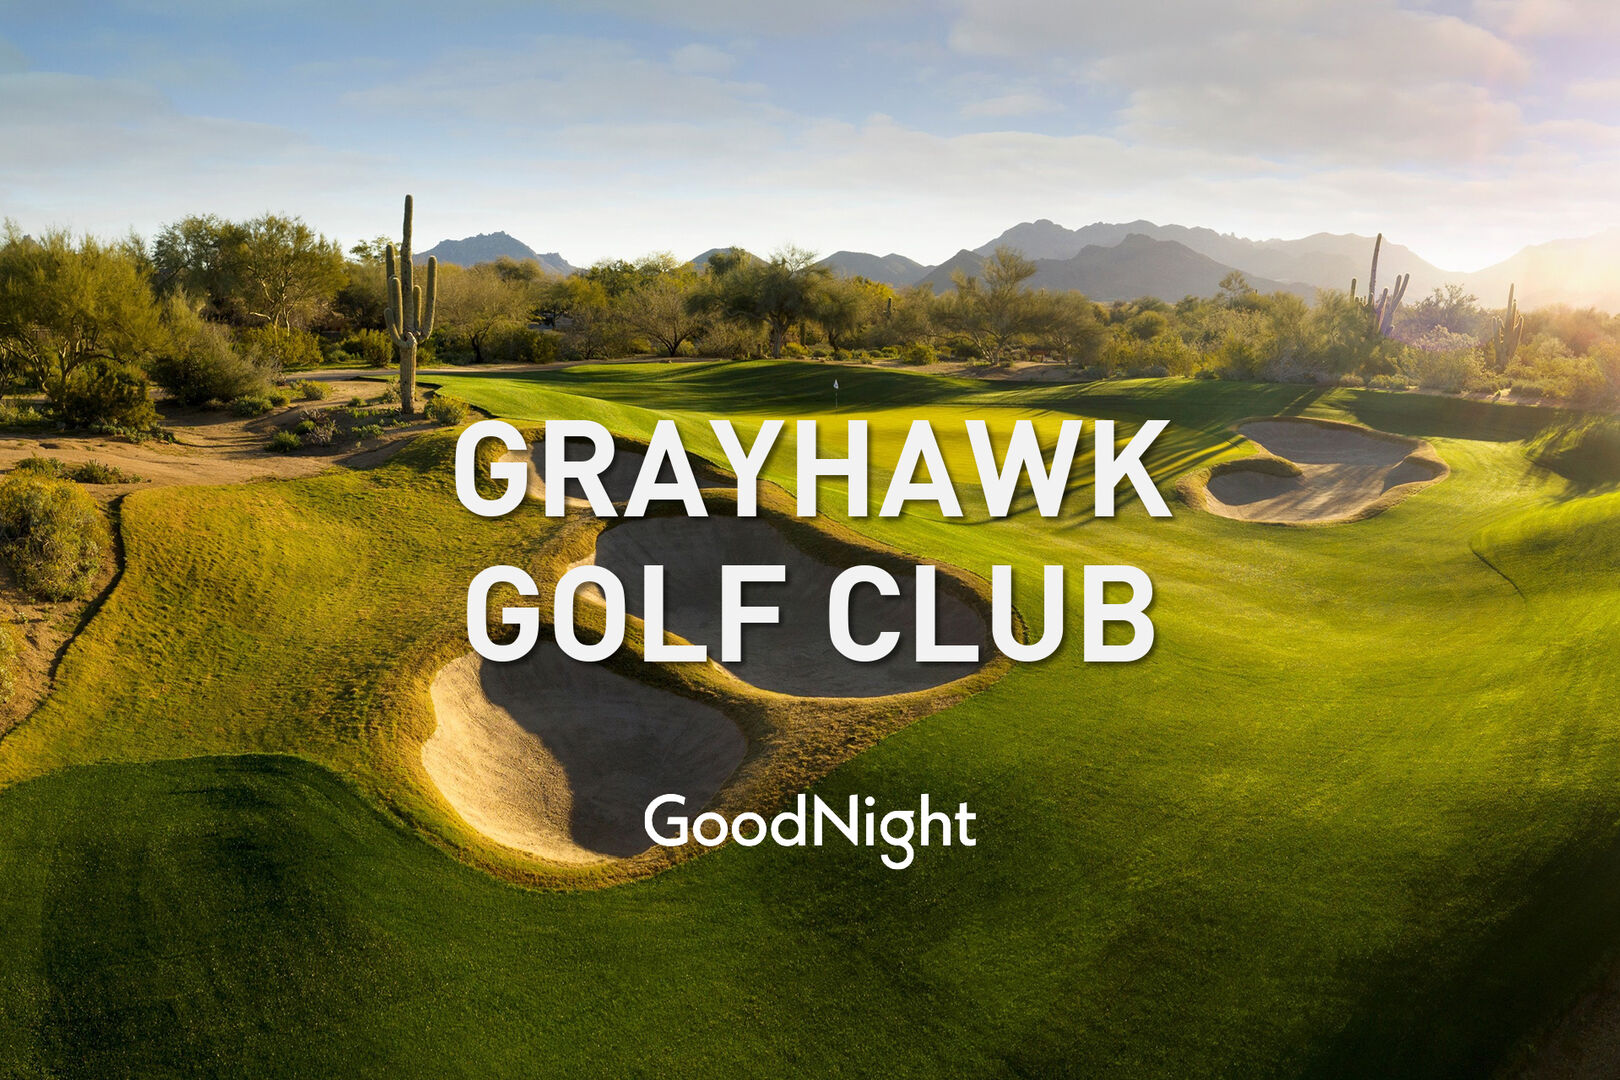 9 mins: Grayhawk Golf Club